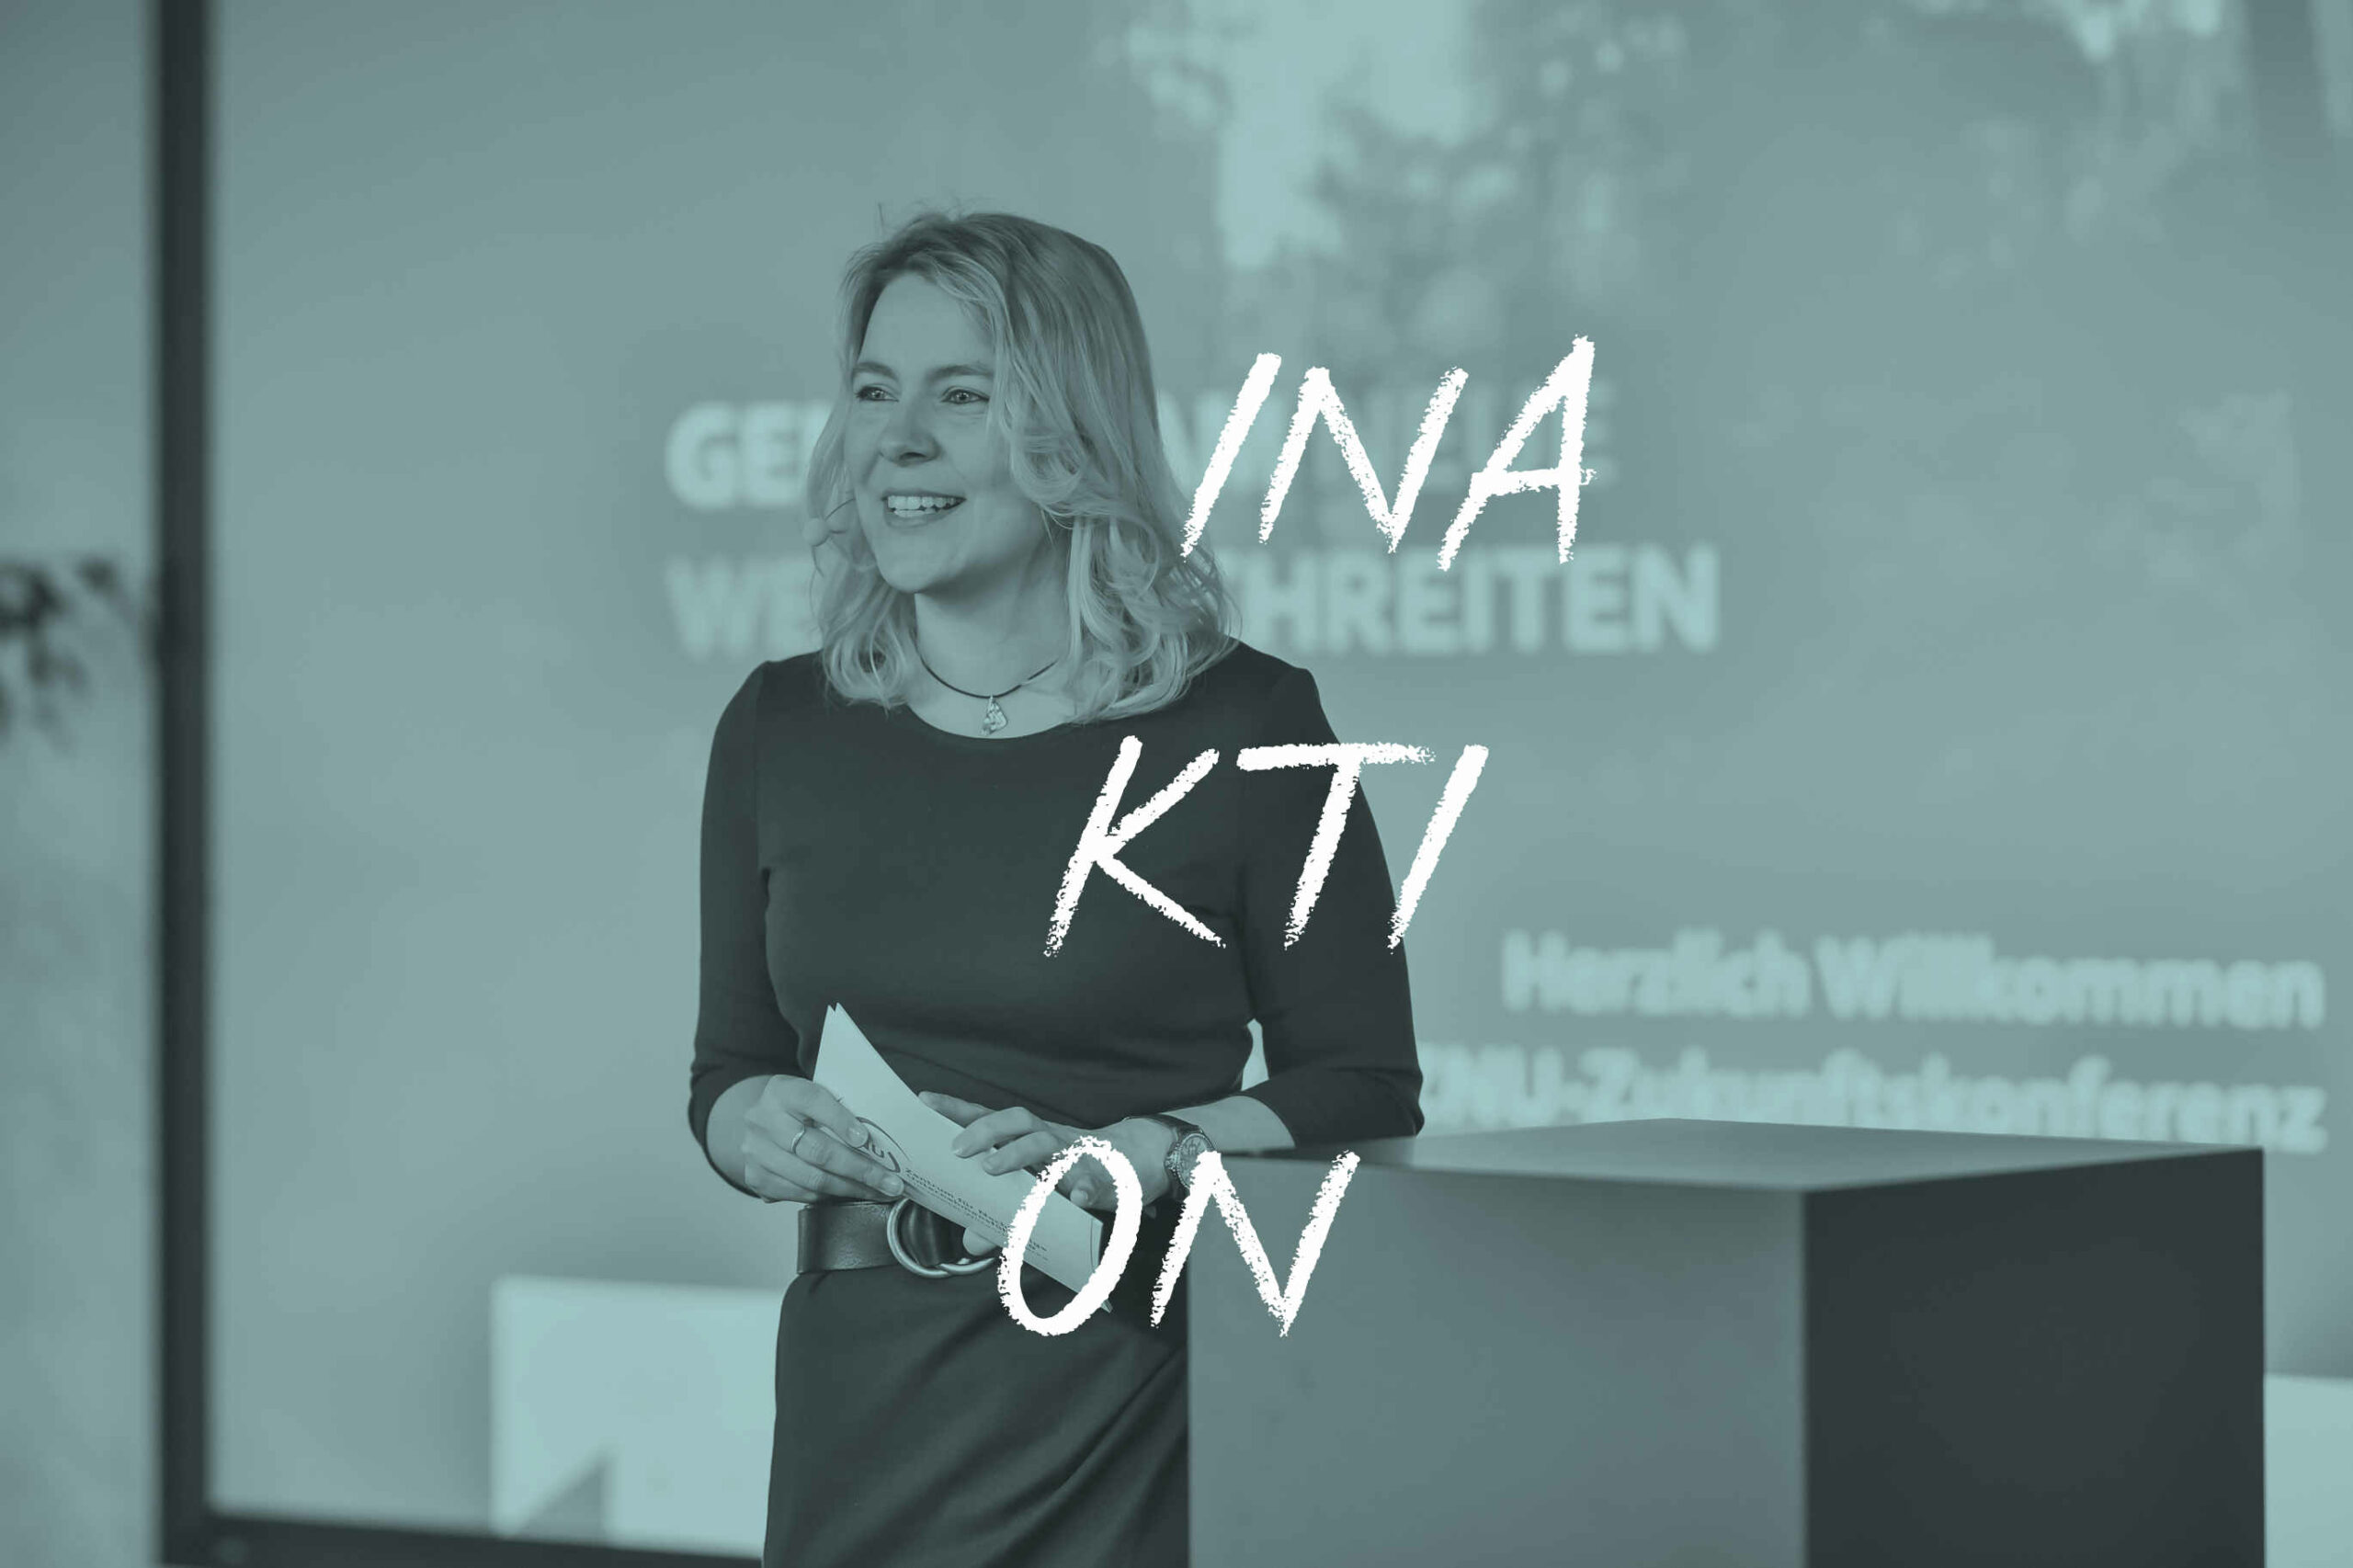 Tina Teucher hält Vortrag, Text: "INA KTI ON"